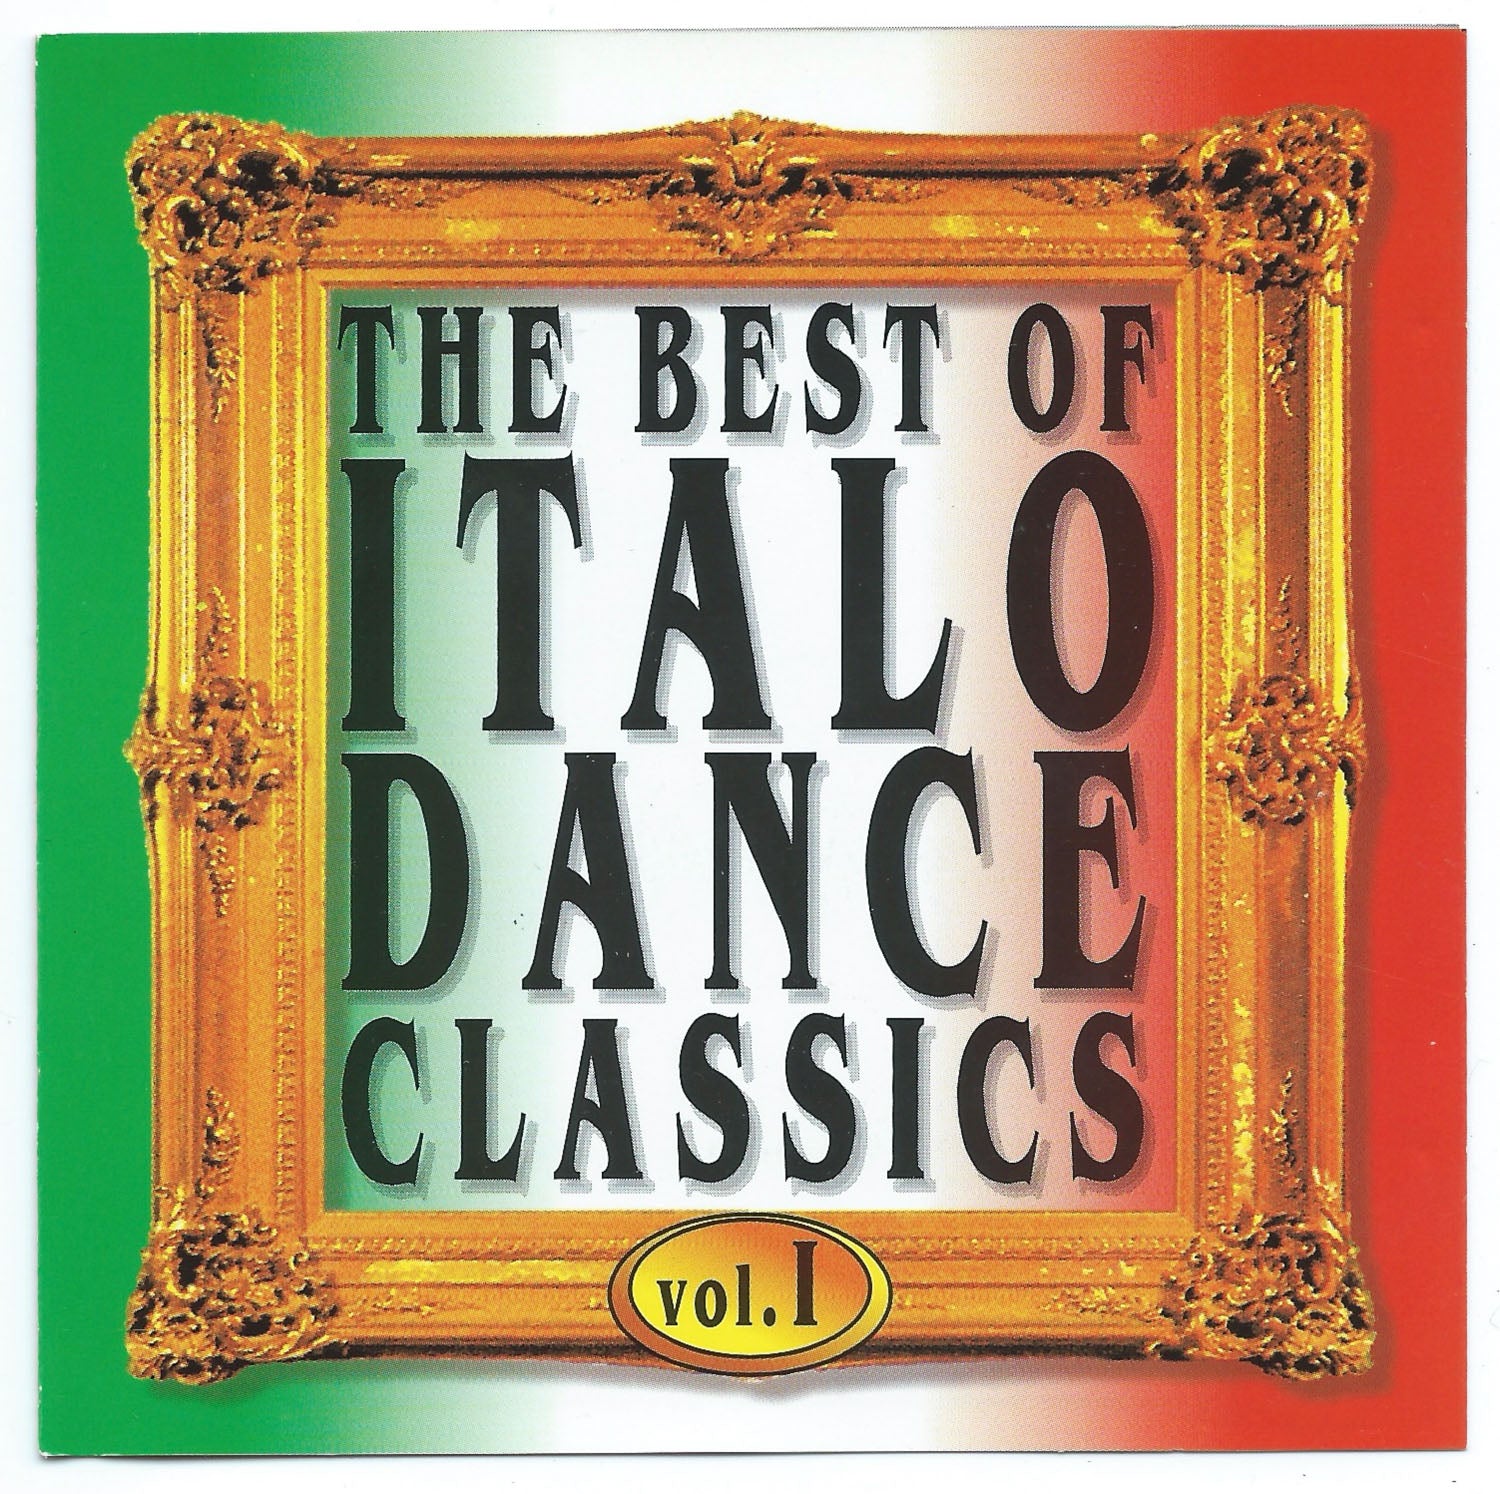 The Best of Italo Dance Classics vol 1